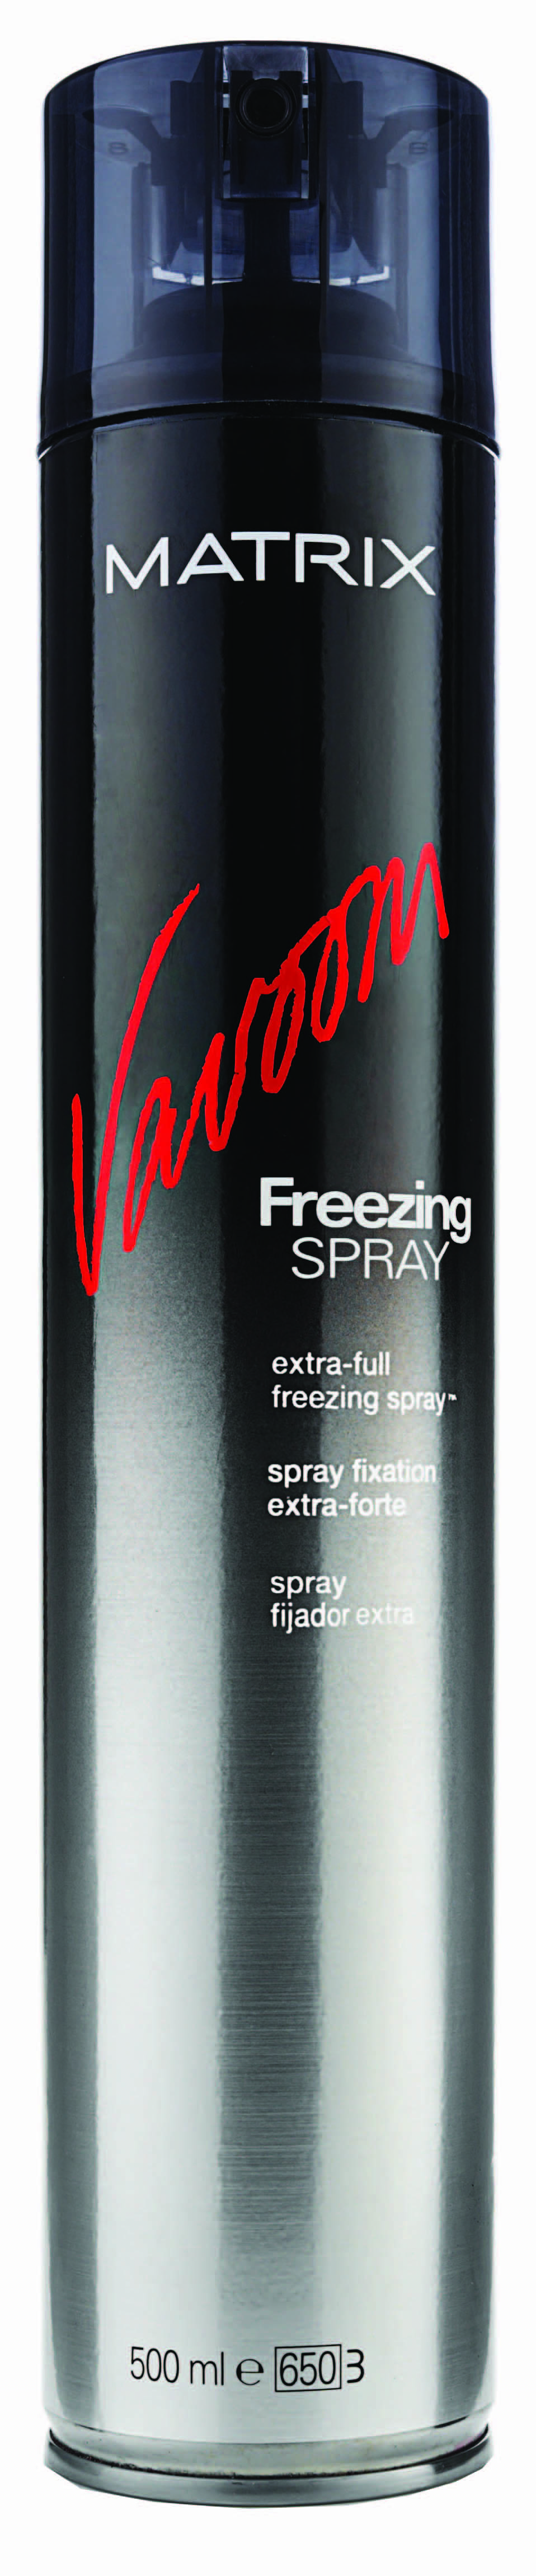 Vavoom Freezing Spray , extra Full, 500ml         